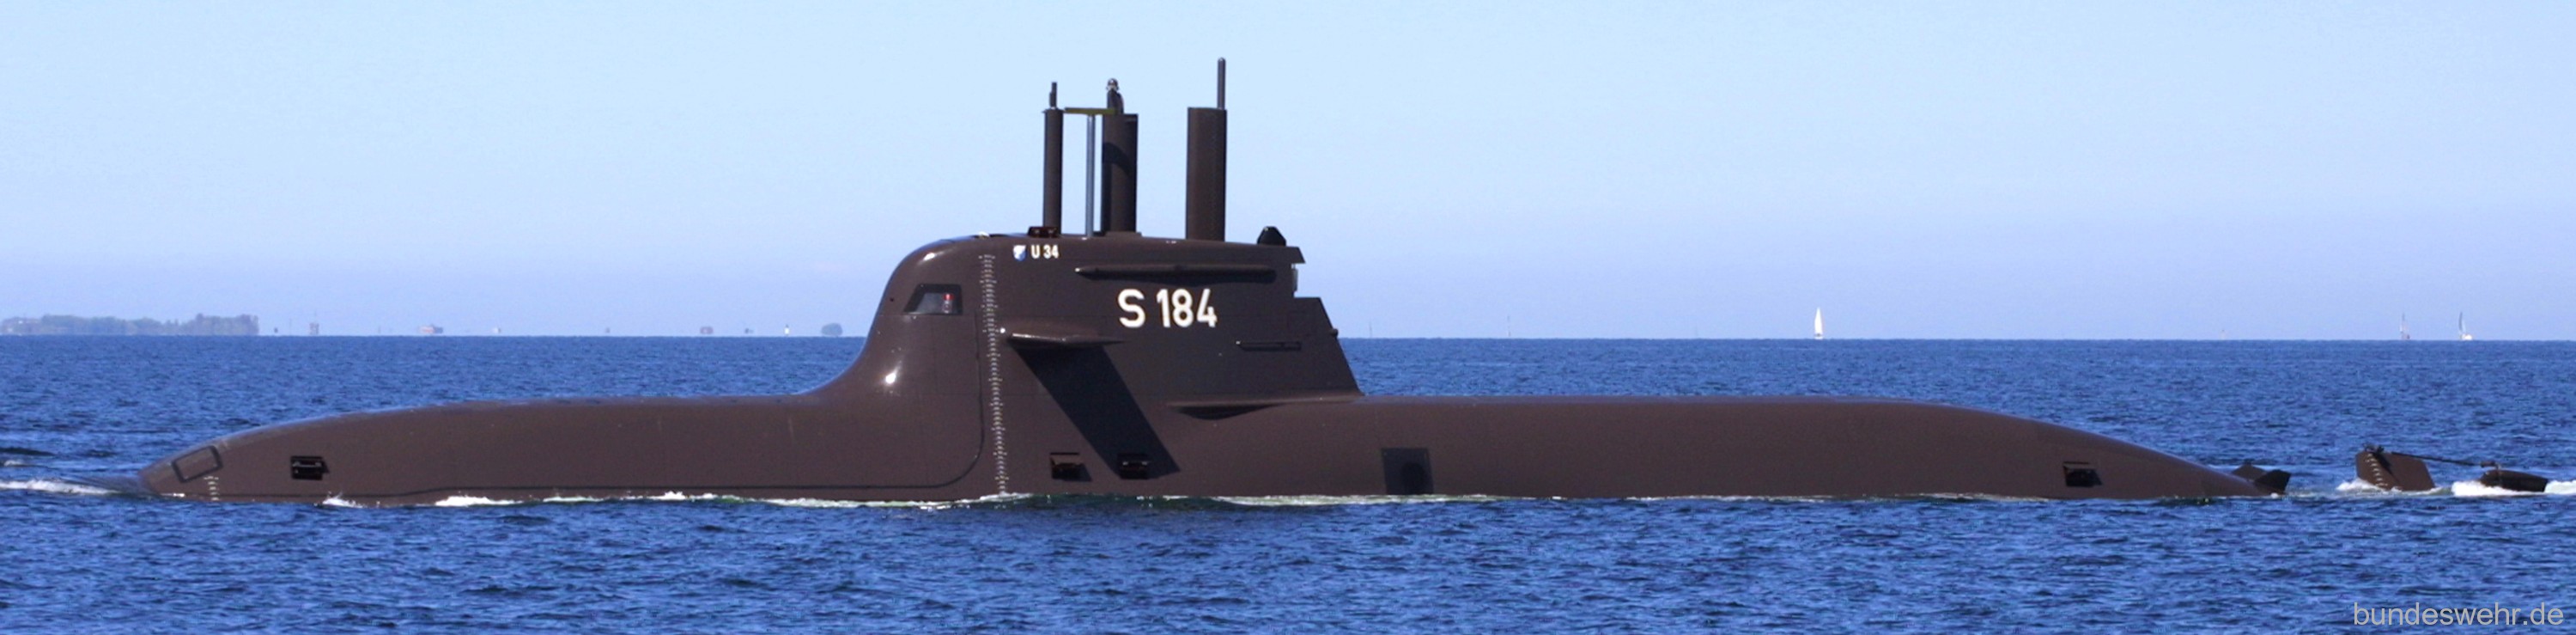 s-184 fgs u34 type 212a class submarine german navy 03